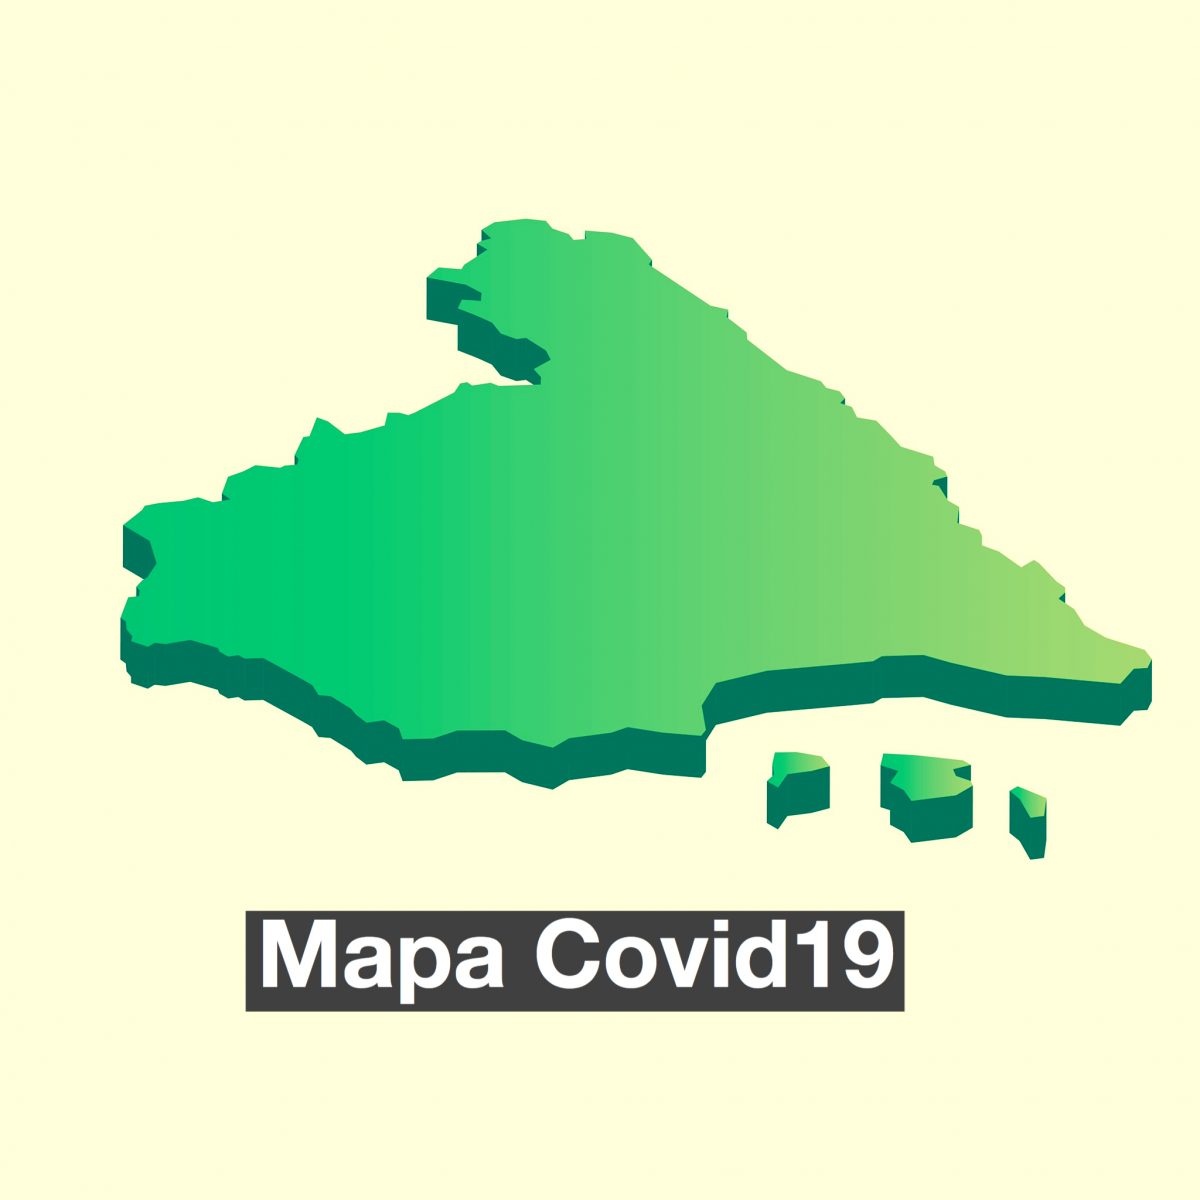 Mapa covid19